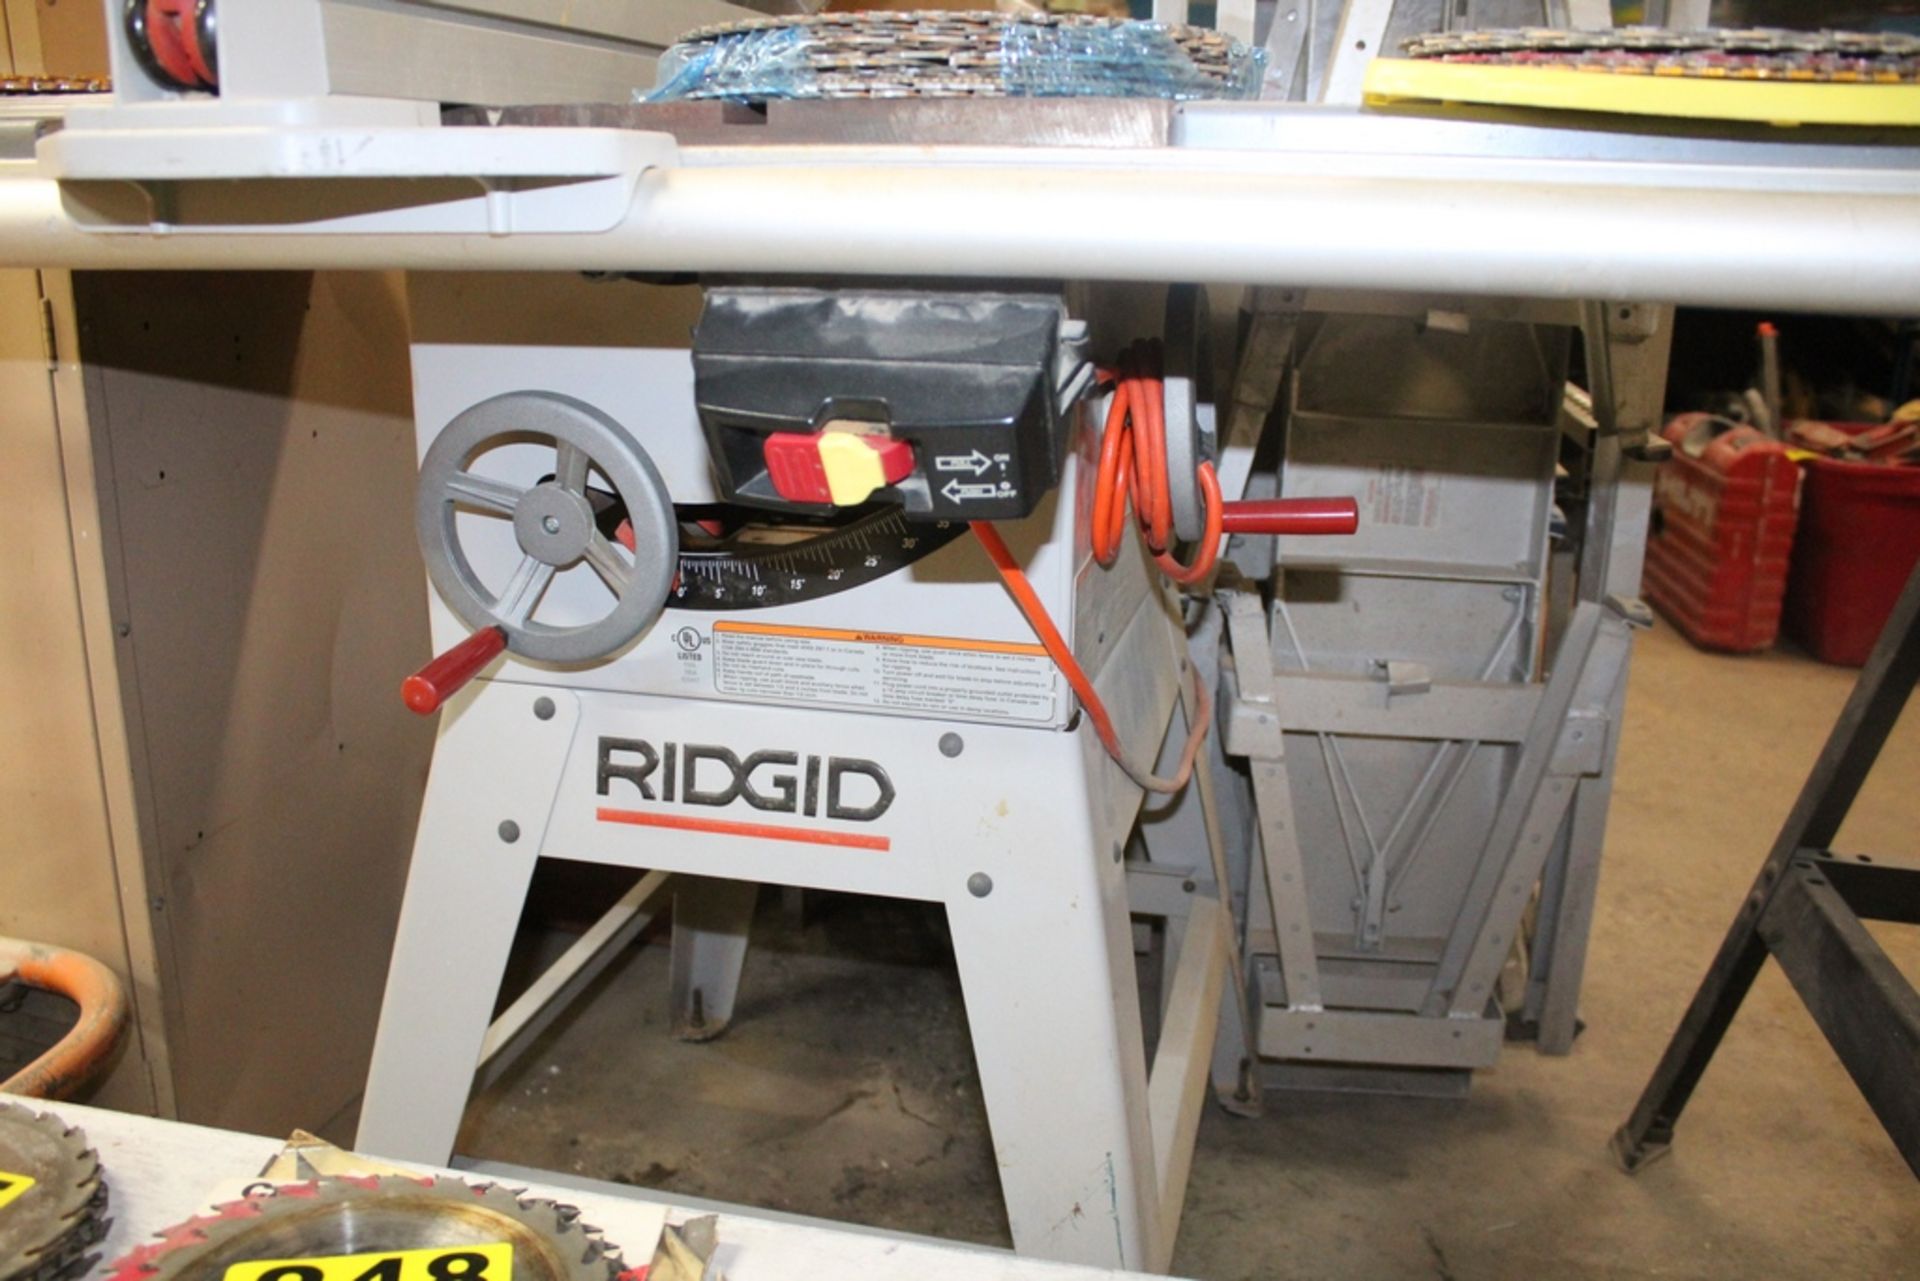 RIDGID MODEL TS2412-0 10" CONTRACTORS TABLE SAW, 1.5HP - Image 2 of 3